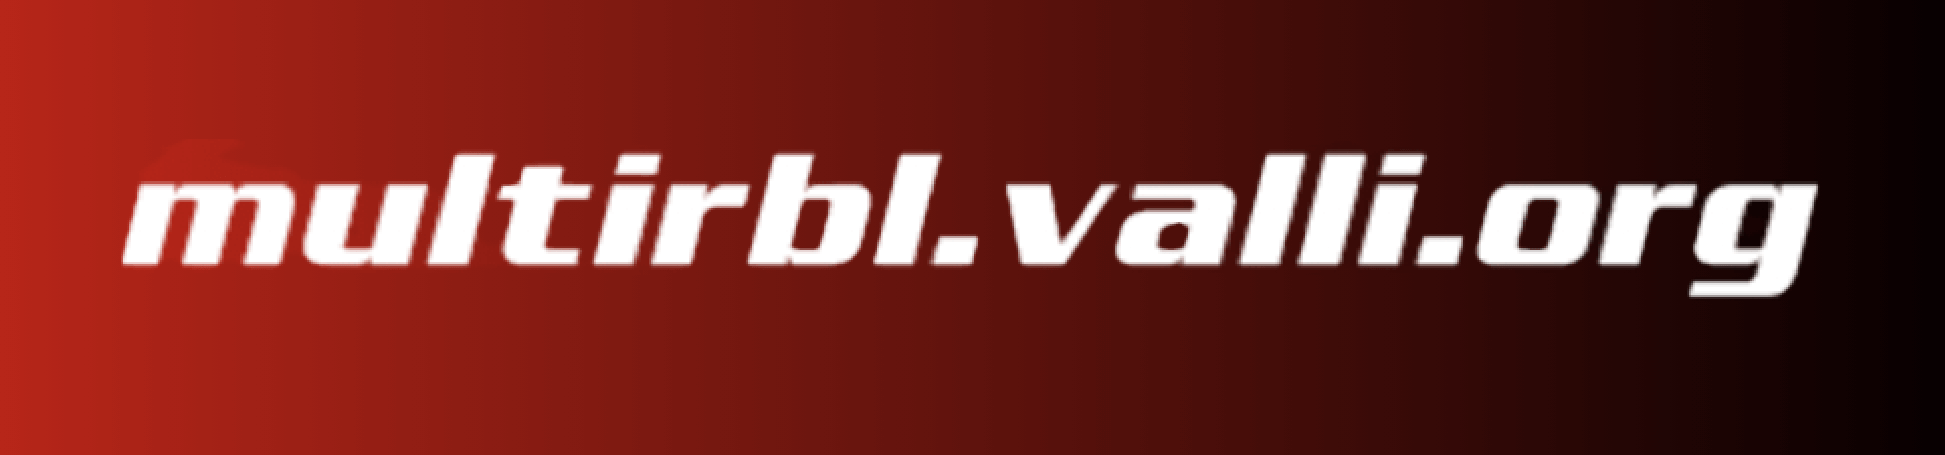 multirbl.valli.org Email Marketing Blacklist IP Domain